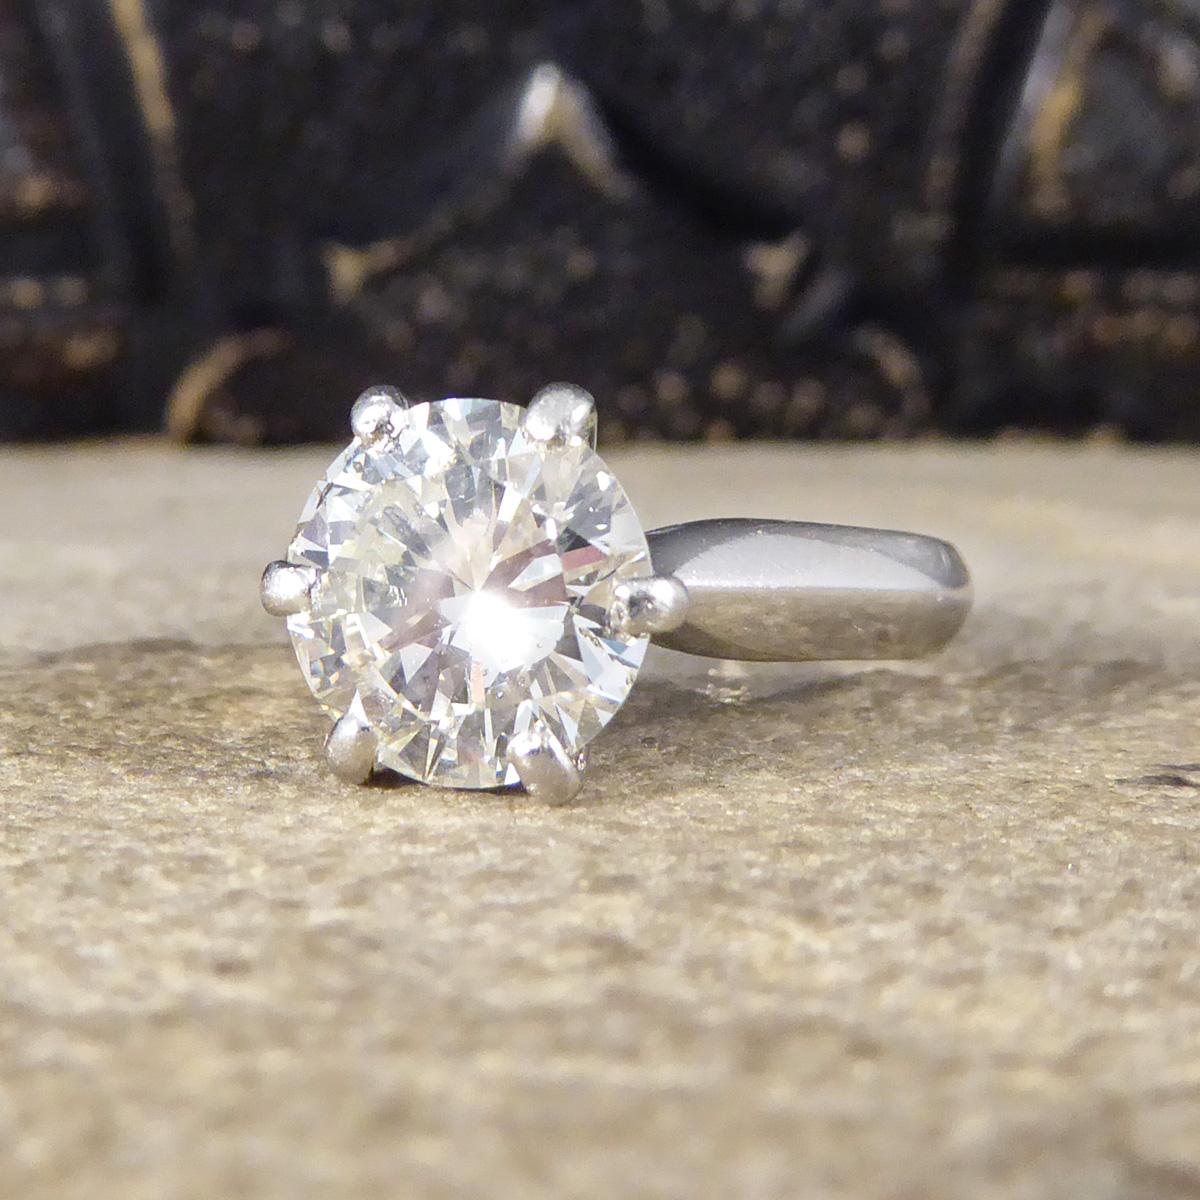 Women's 2.54ct Brilliant Cut Diamond Solitaire Engagement Ring on Plain Platinum Band For Sale